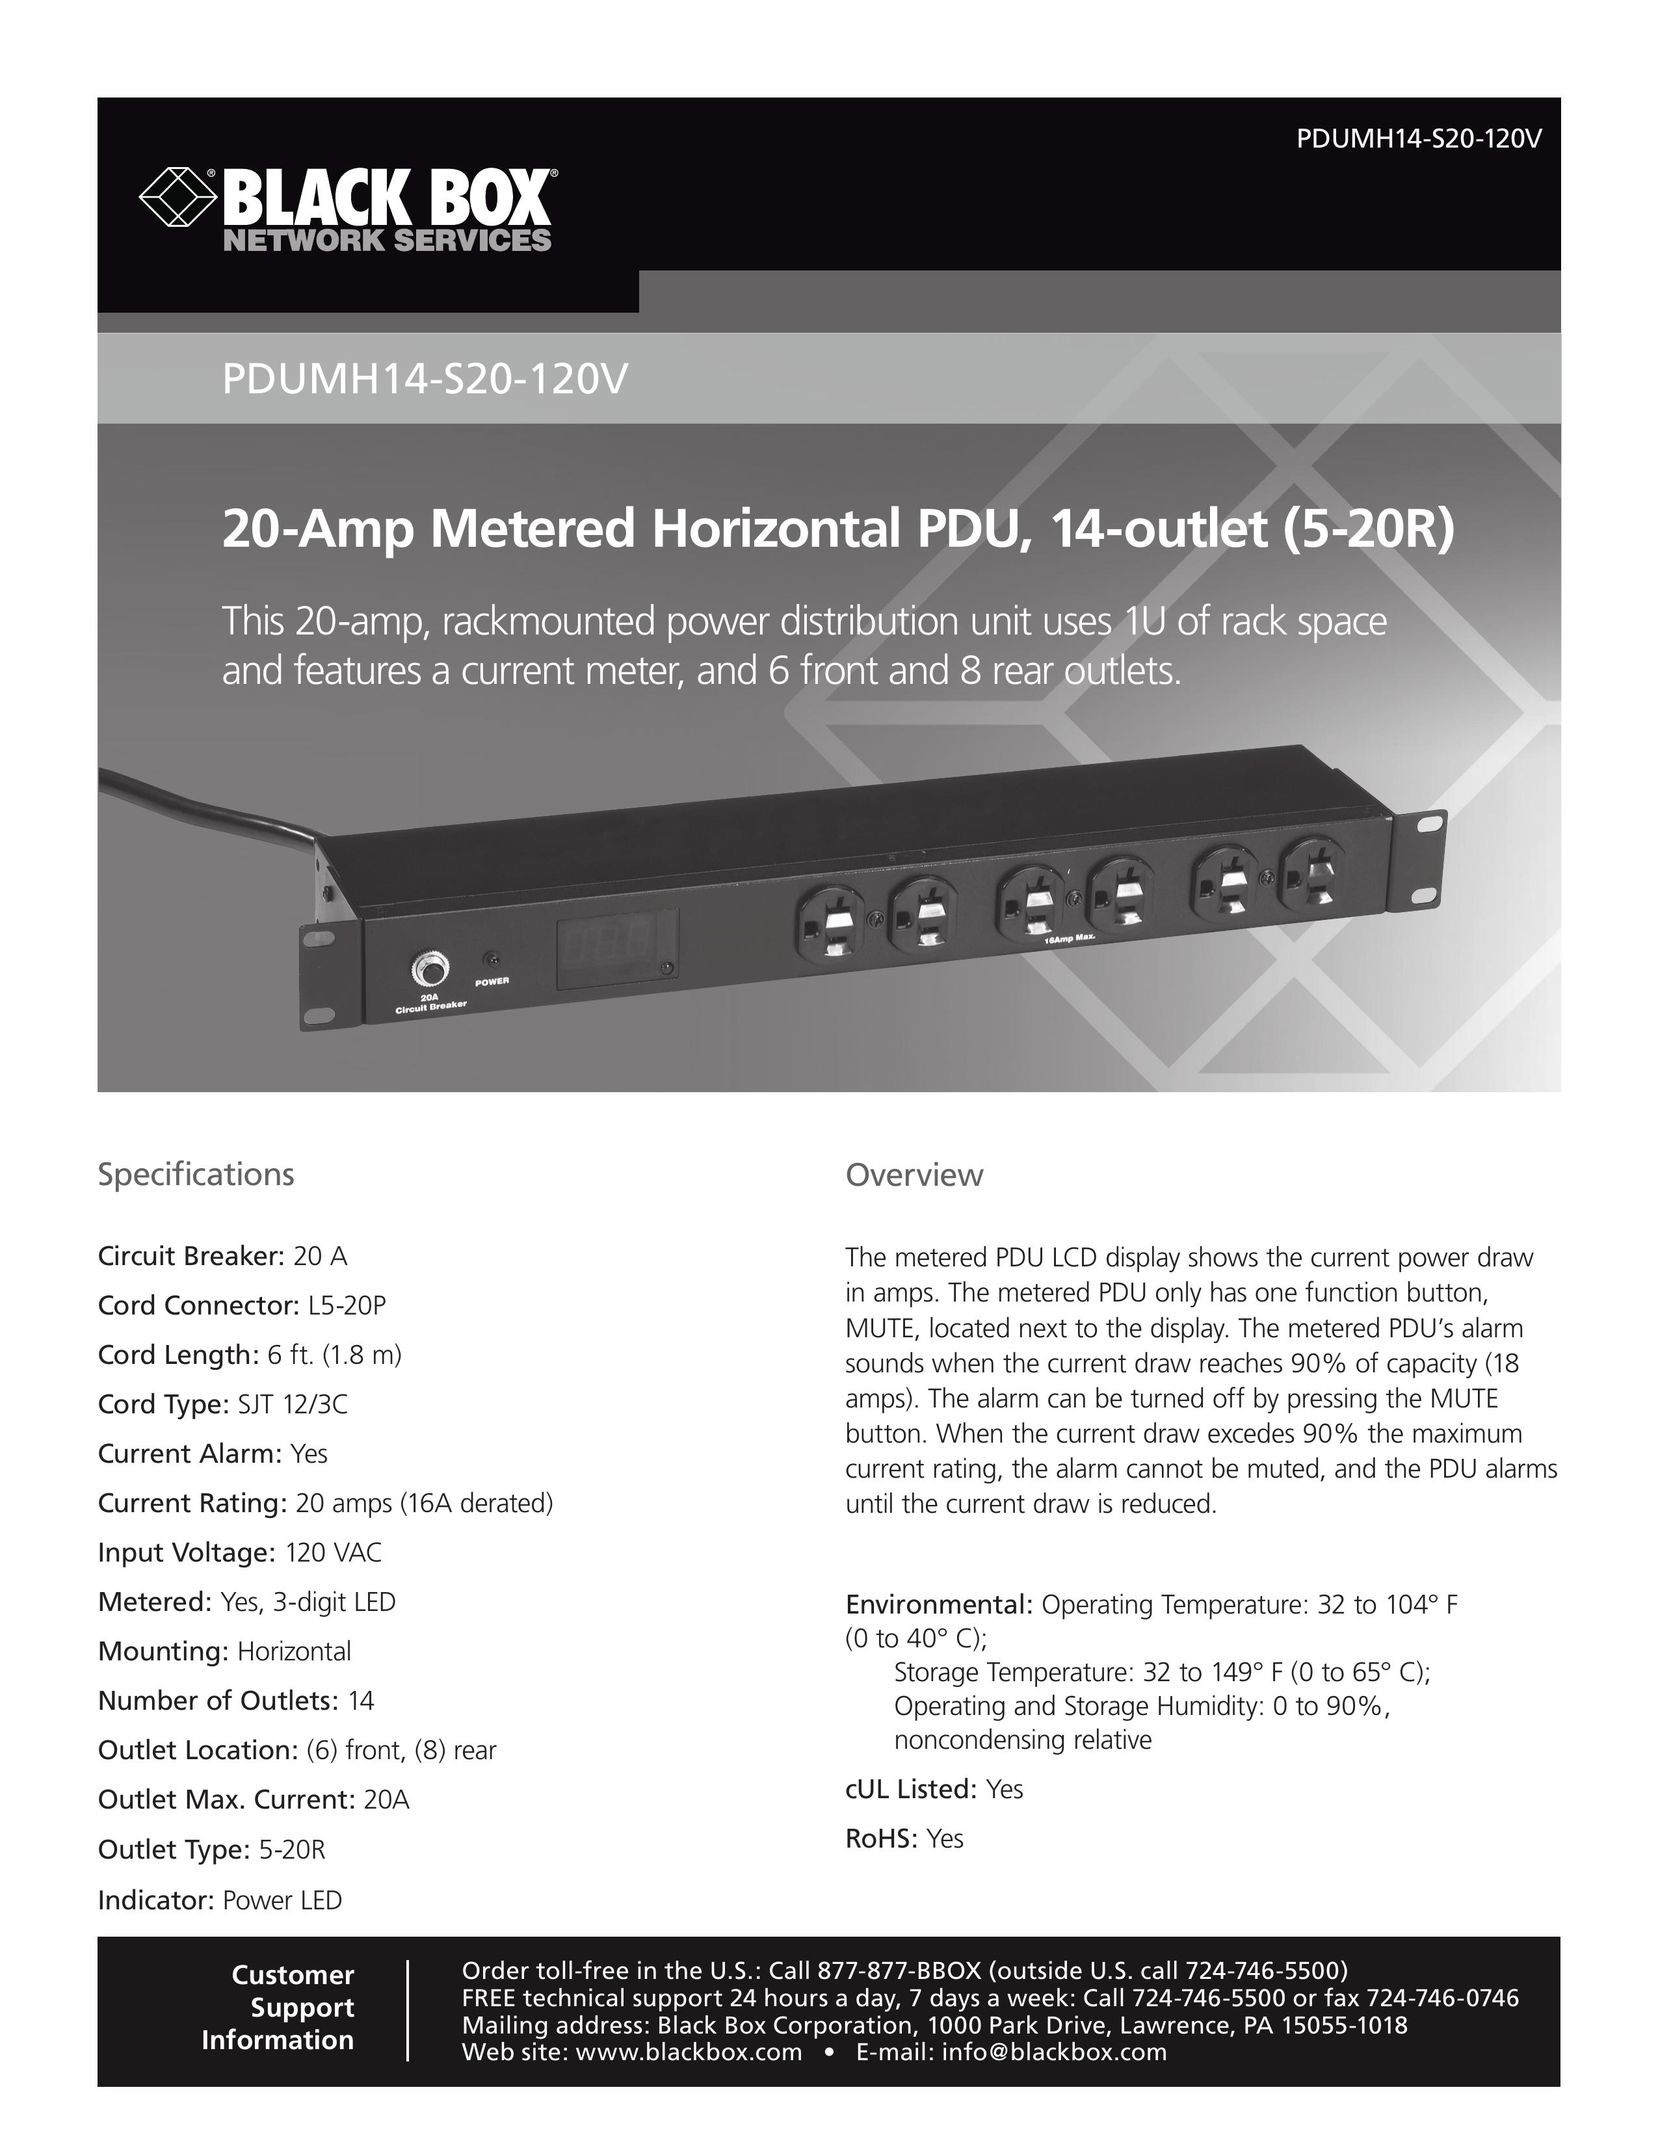 Black Box 20-Amp Metered Horizontal PDU, 14-outlet (5-20R) Power Supply User Manual